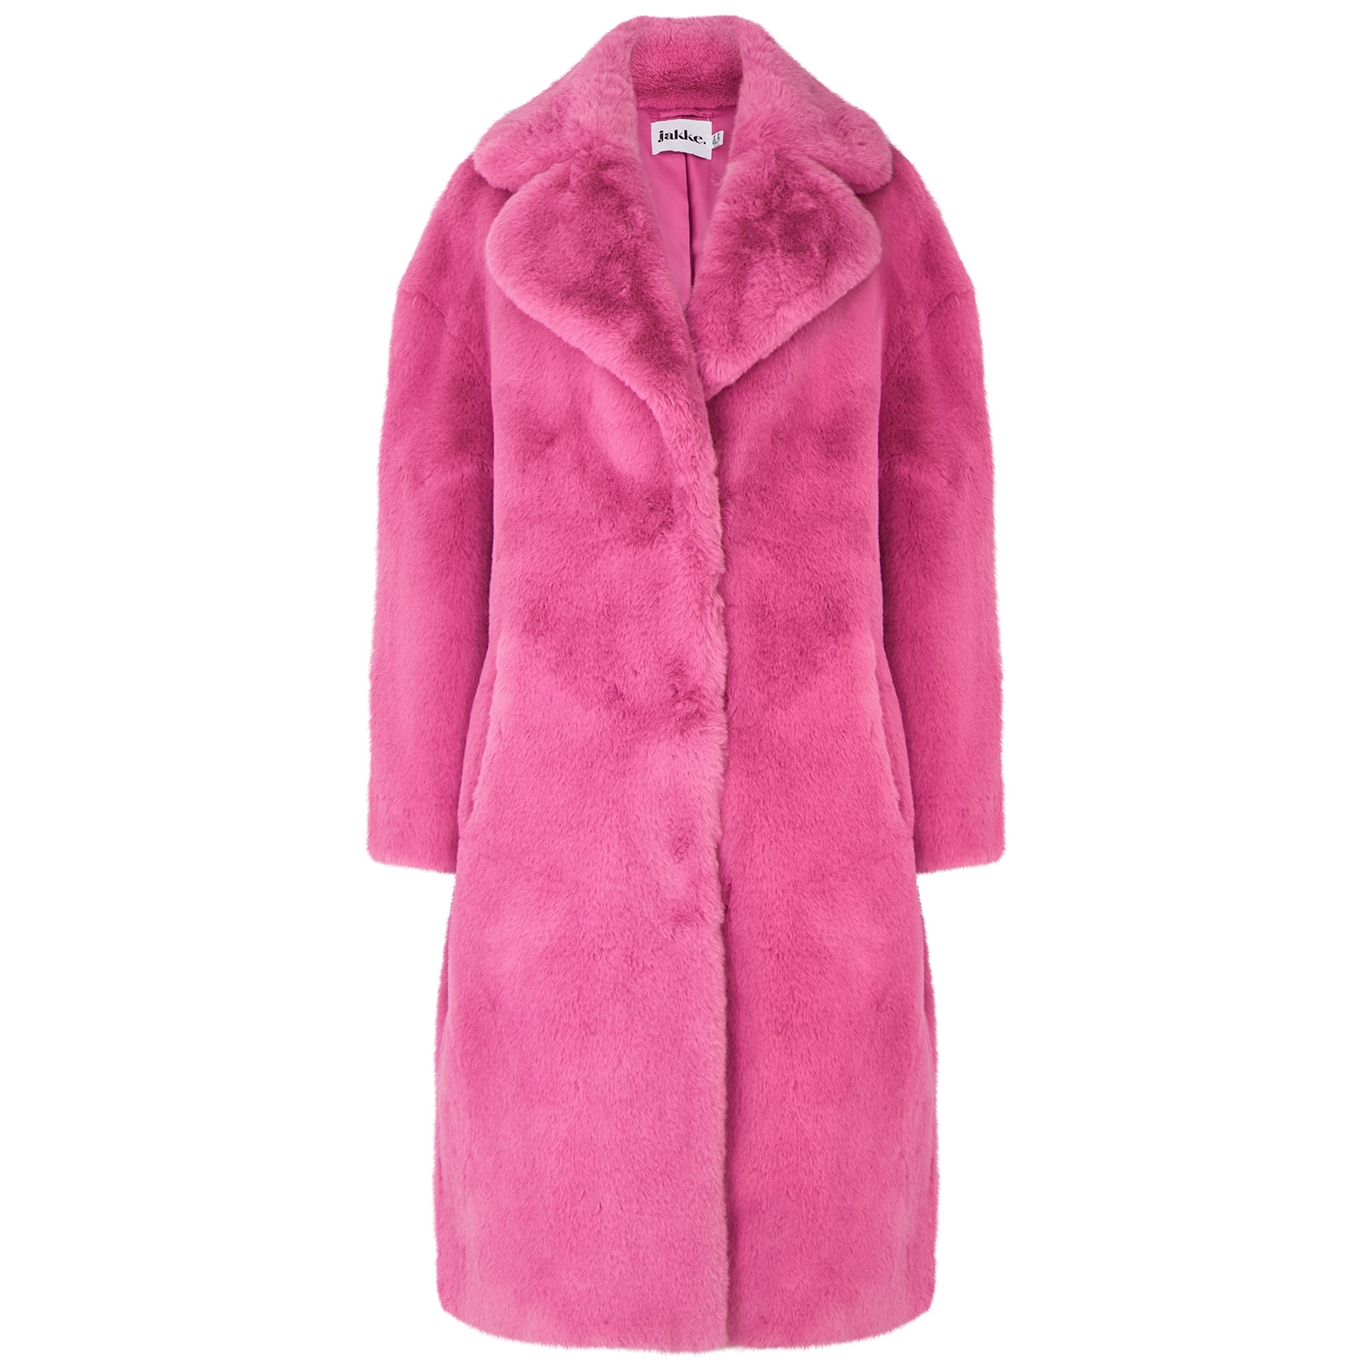 Jakke Katie Pink Faux Fur Coat - Bright Pink - L